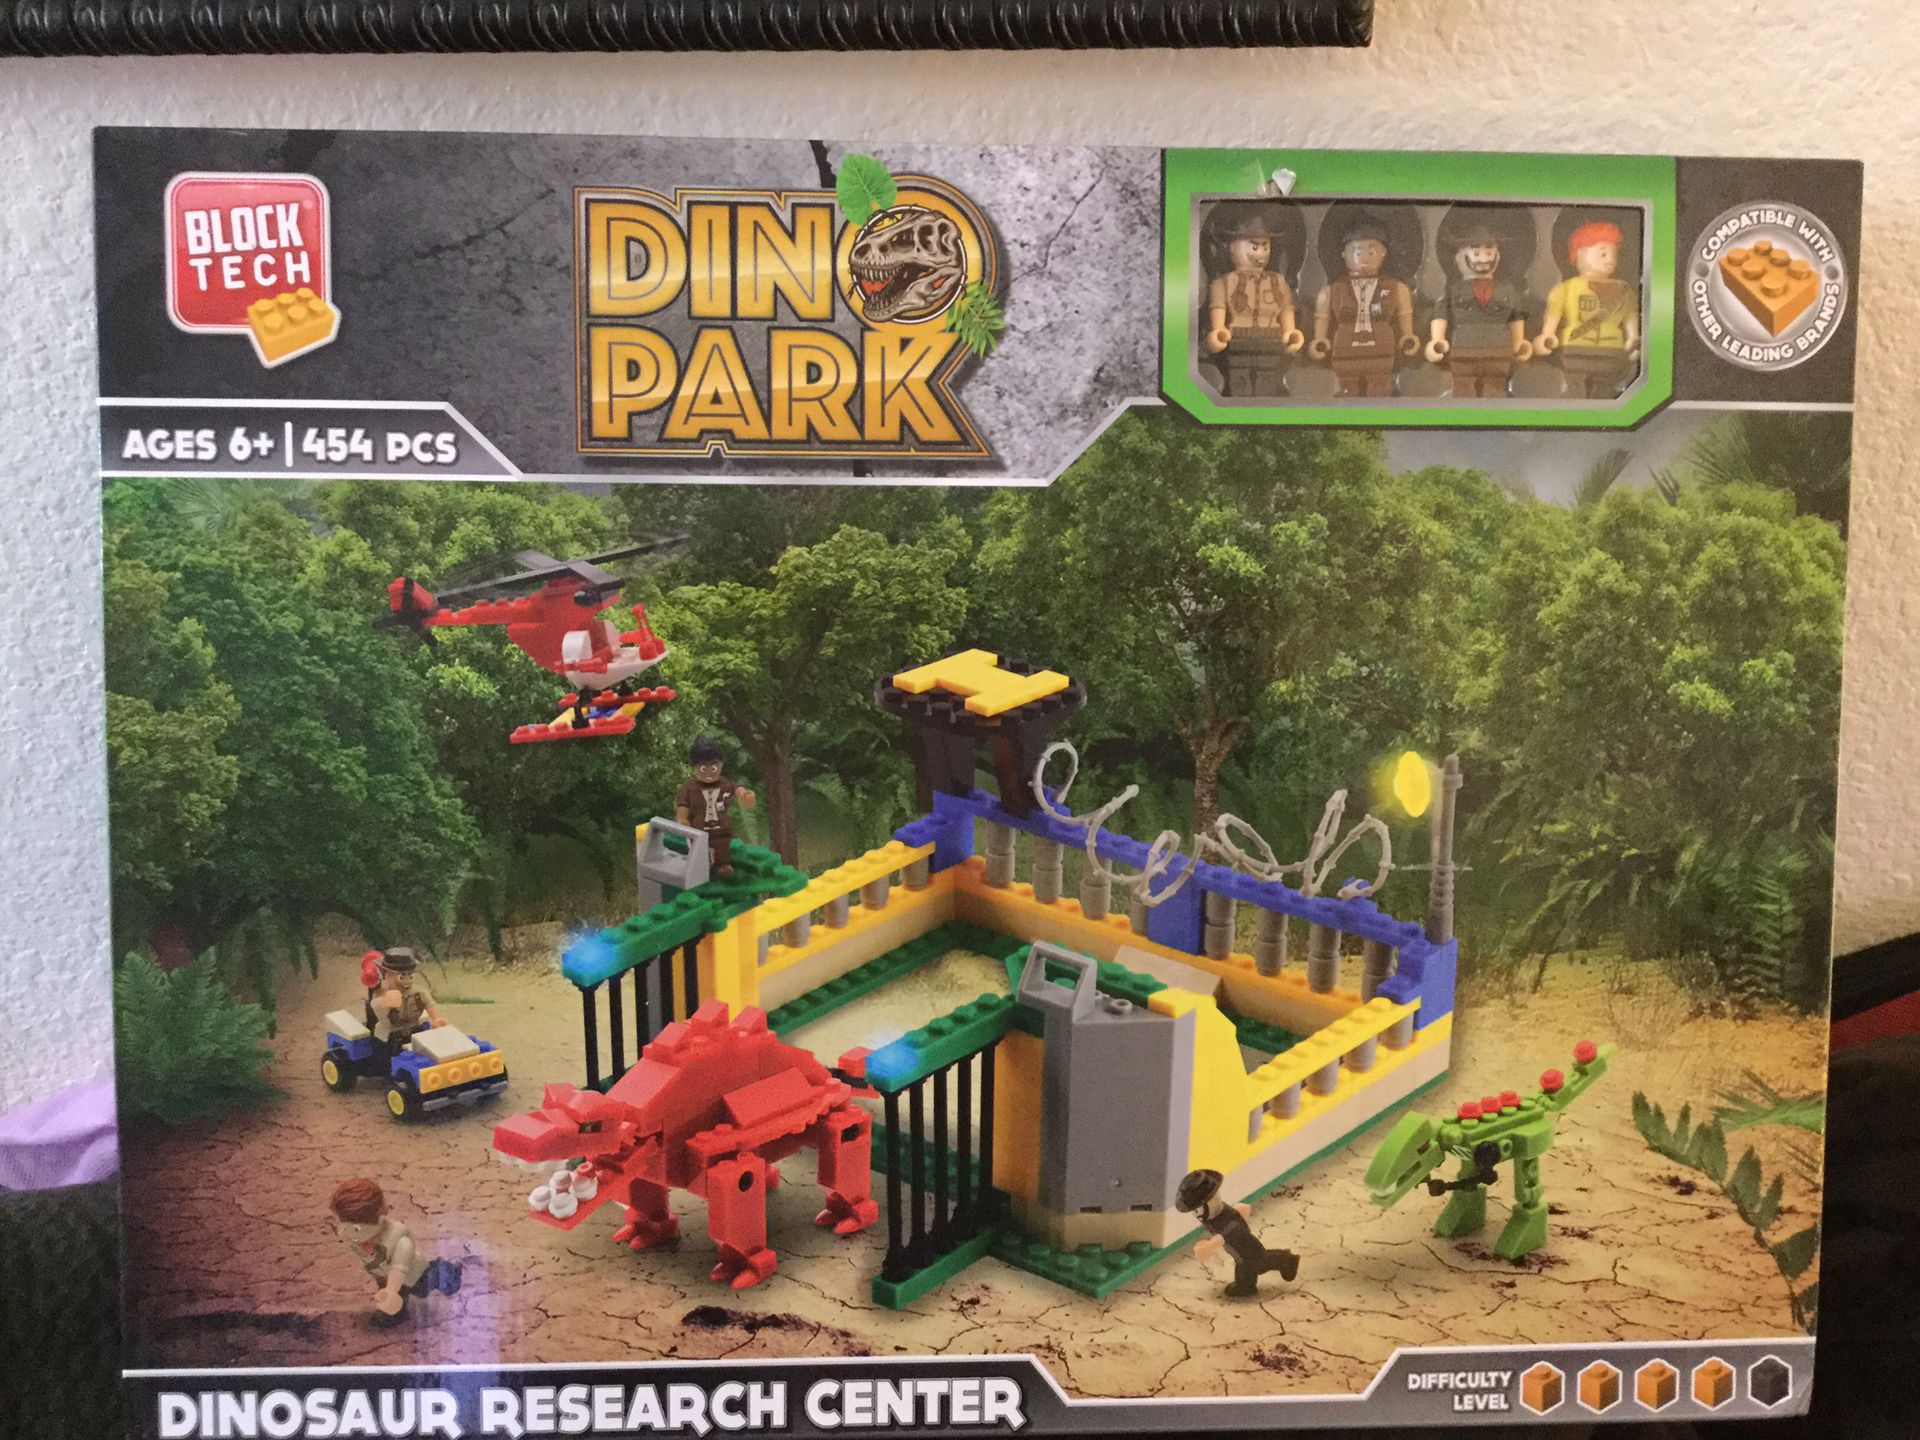 New dinosaur lego